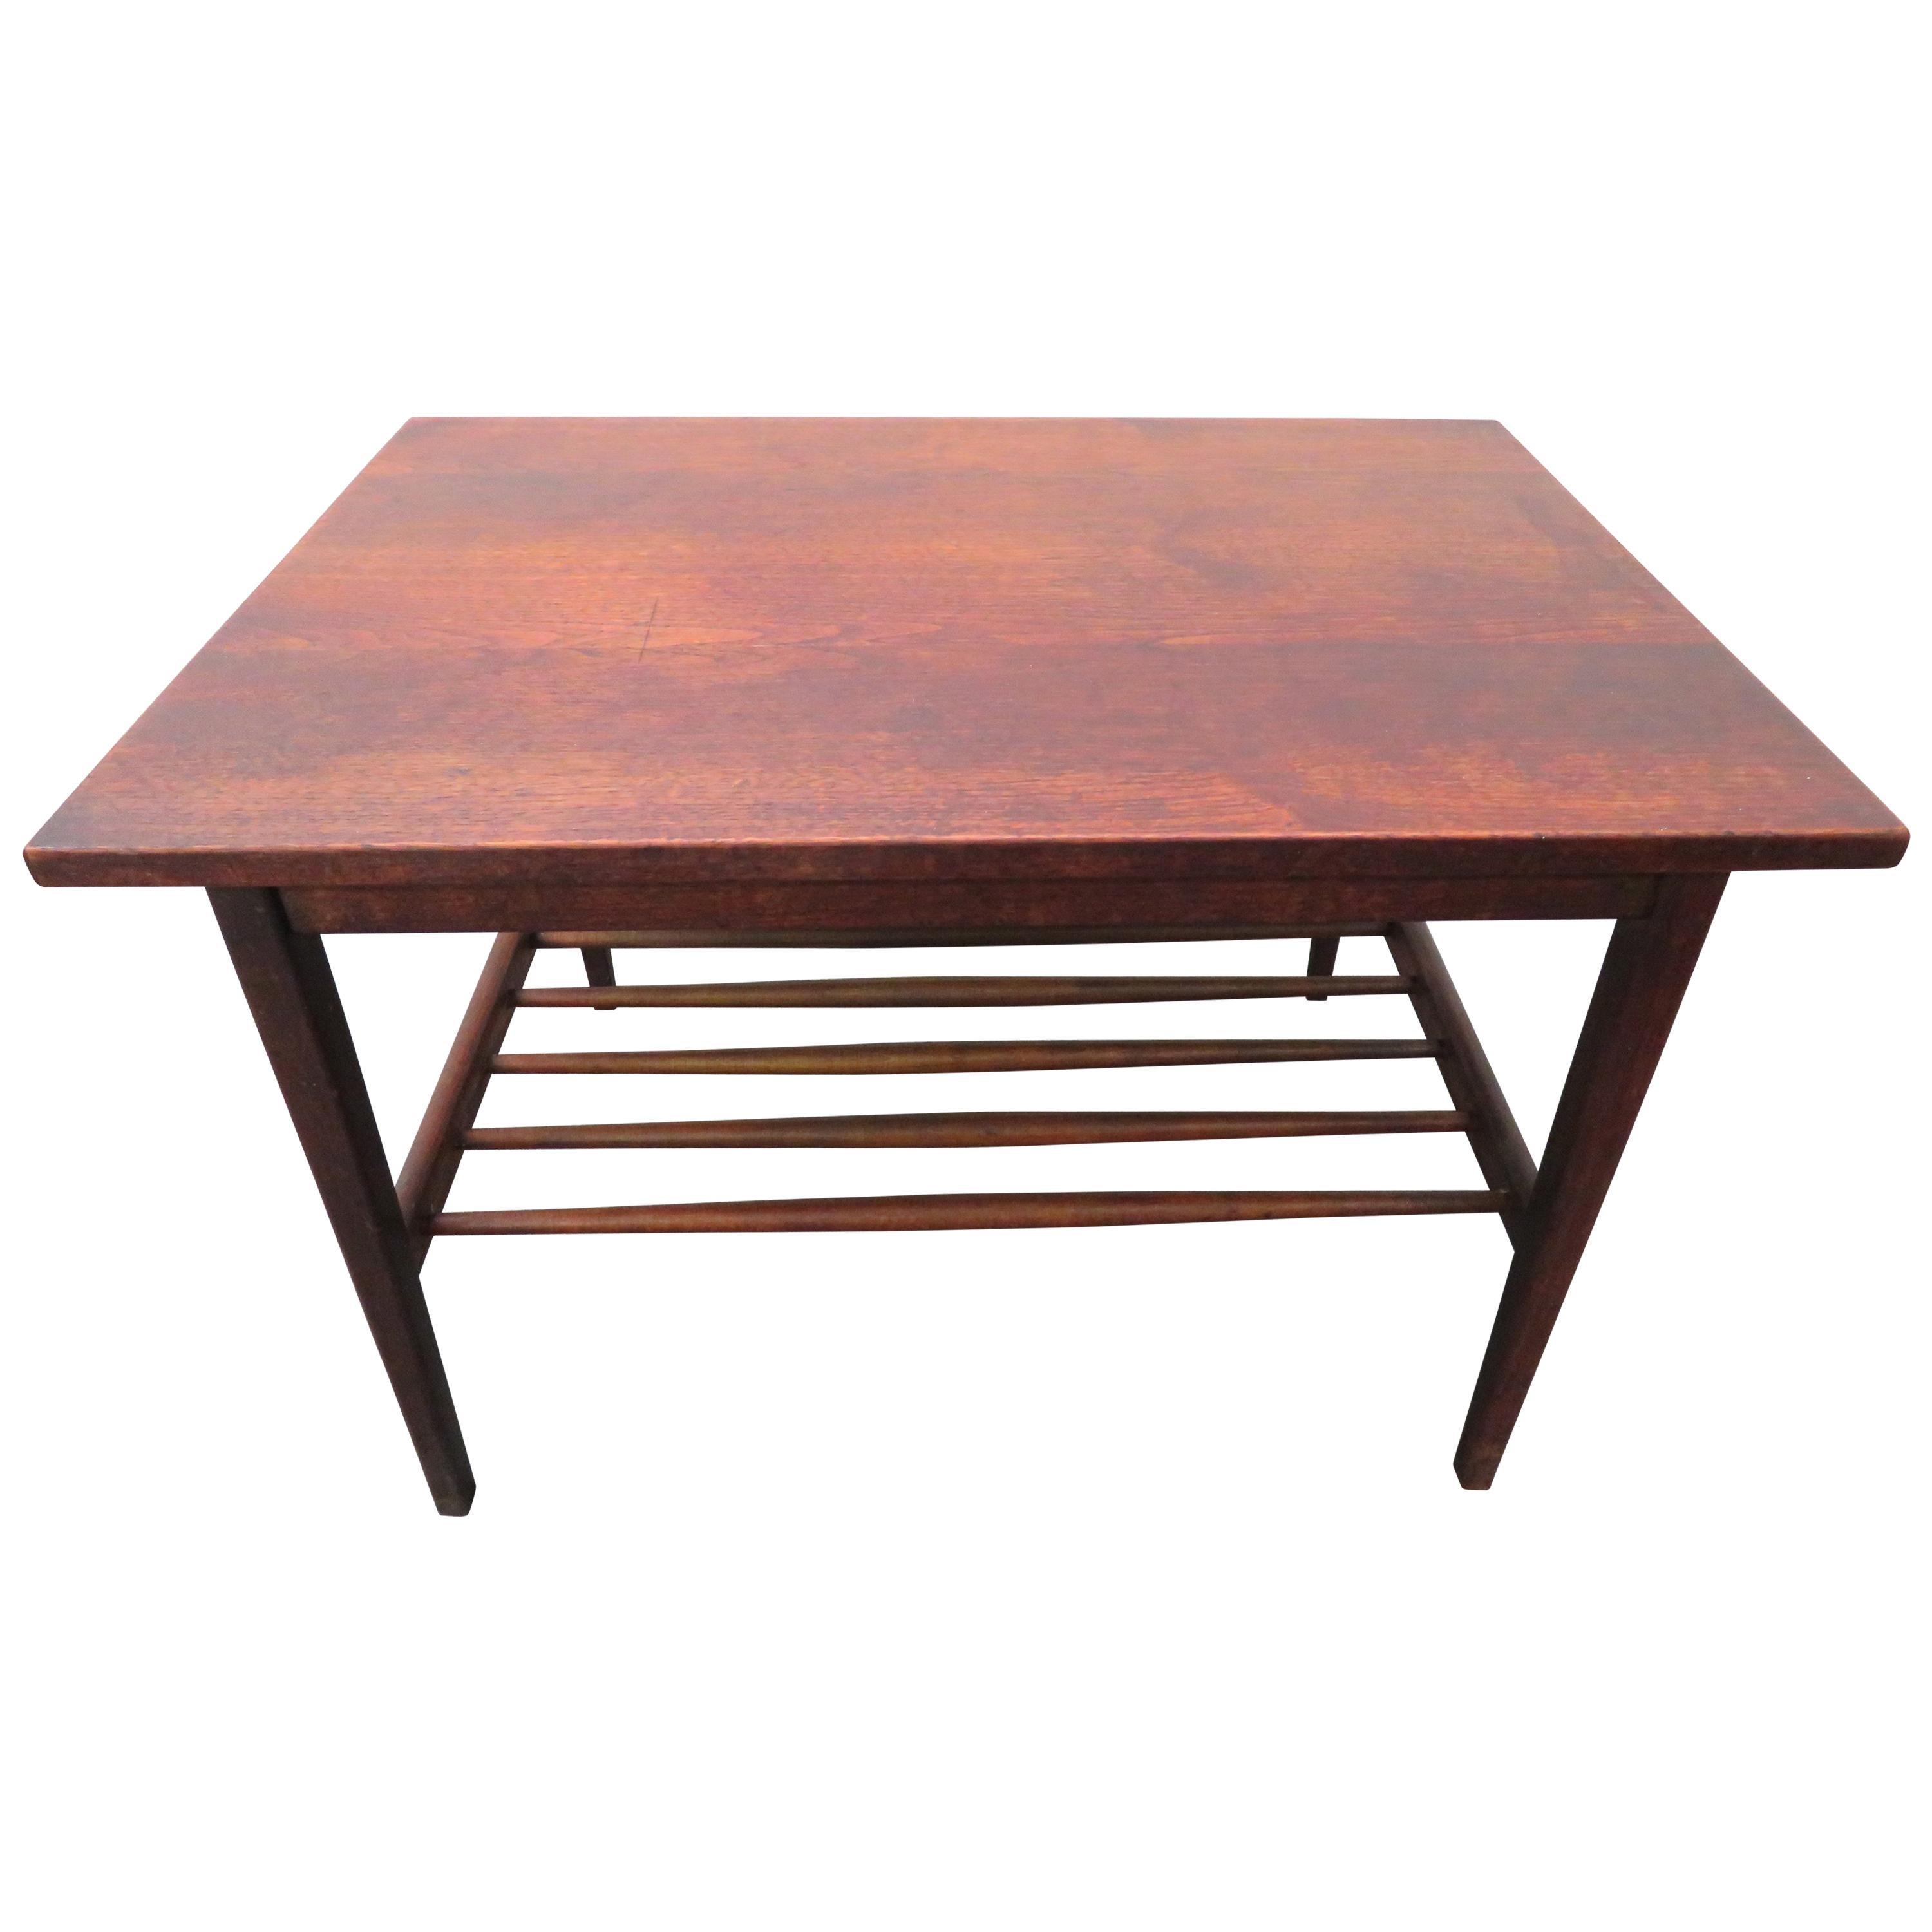 Stylish Mid-Century Modern Walnut End Table by Jens Risom